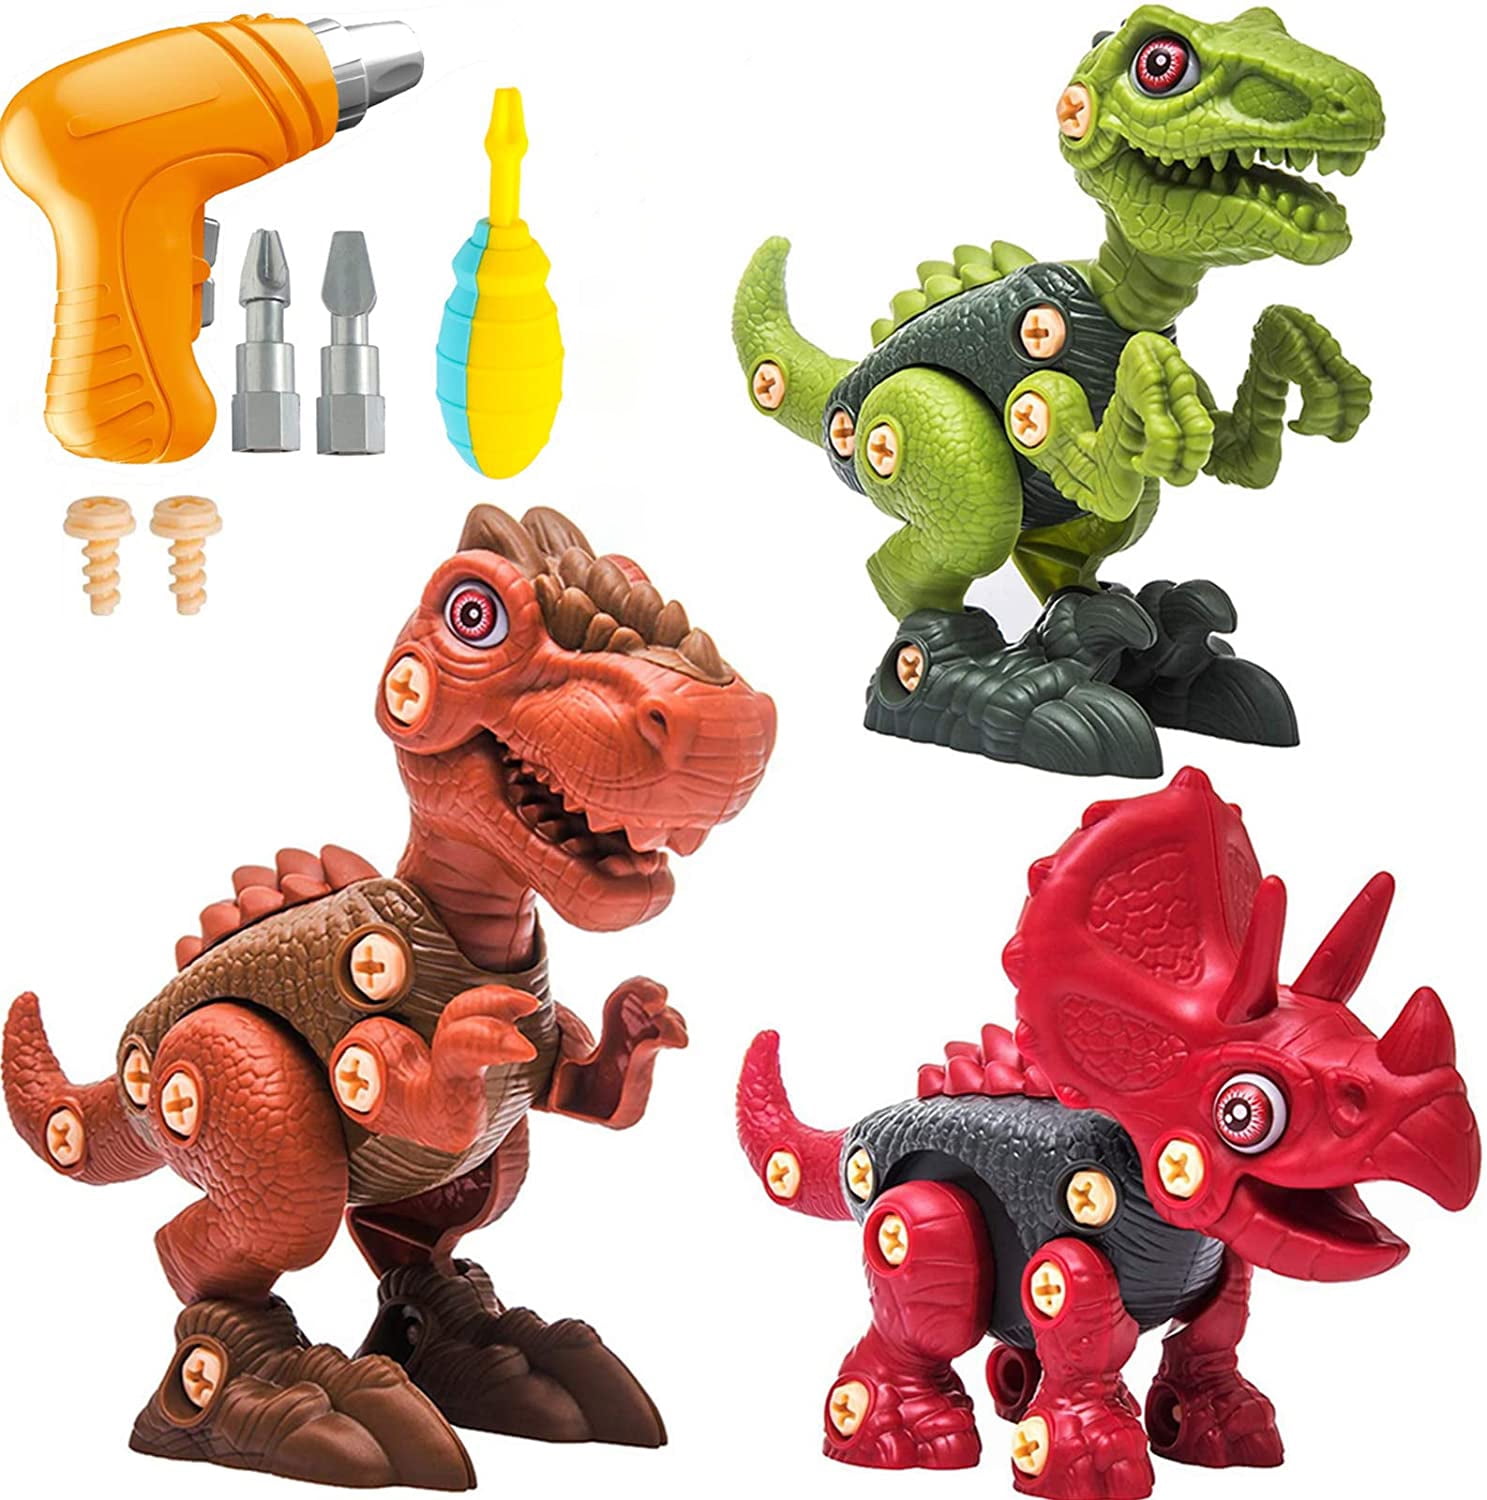 Take Apart Dinosaur Toys with Dinosaur Eggs DIY STEM Building Toys Set for Kids 3-7 Three Dinosaurs 